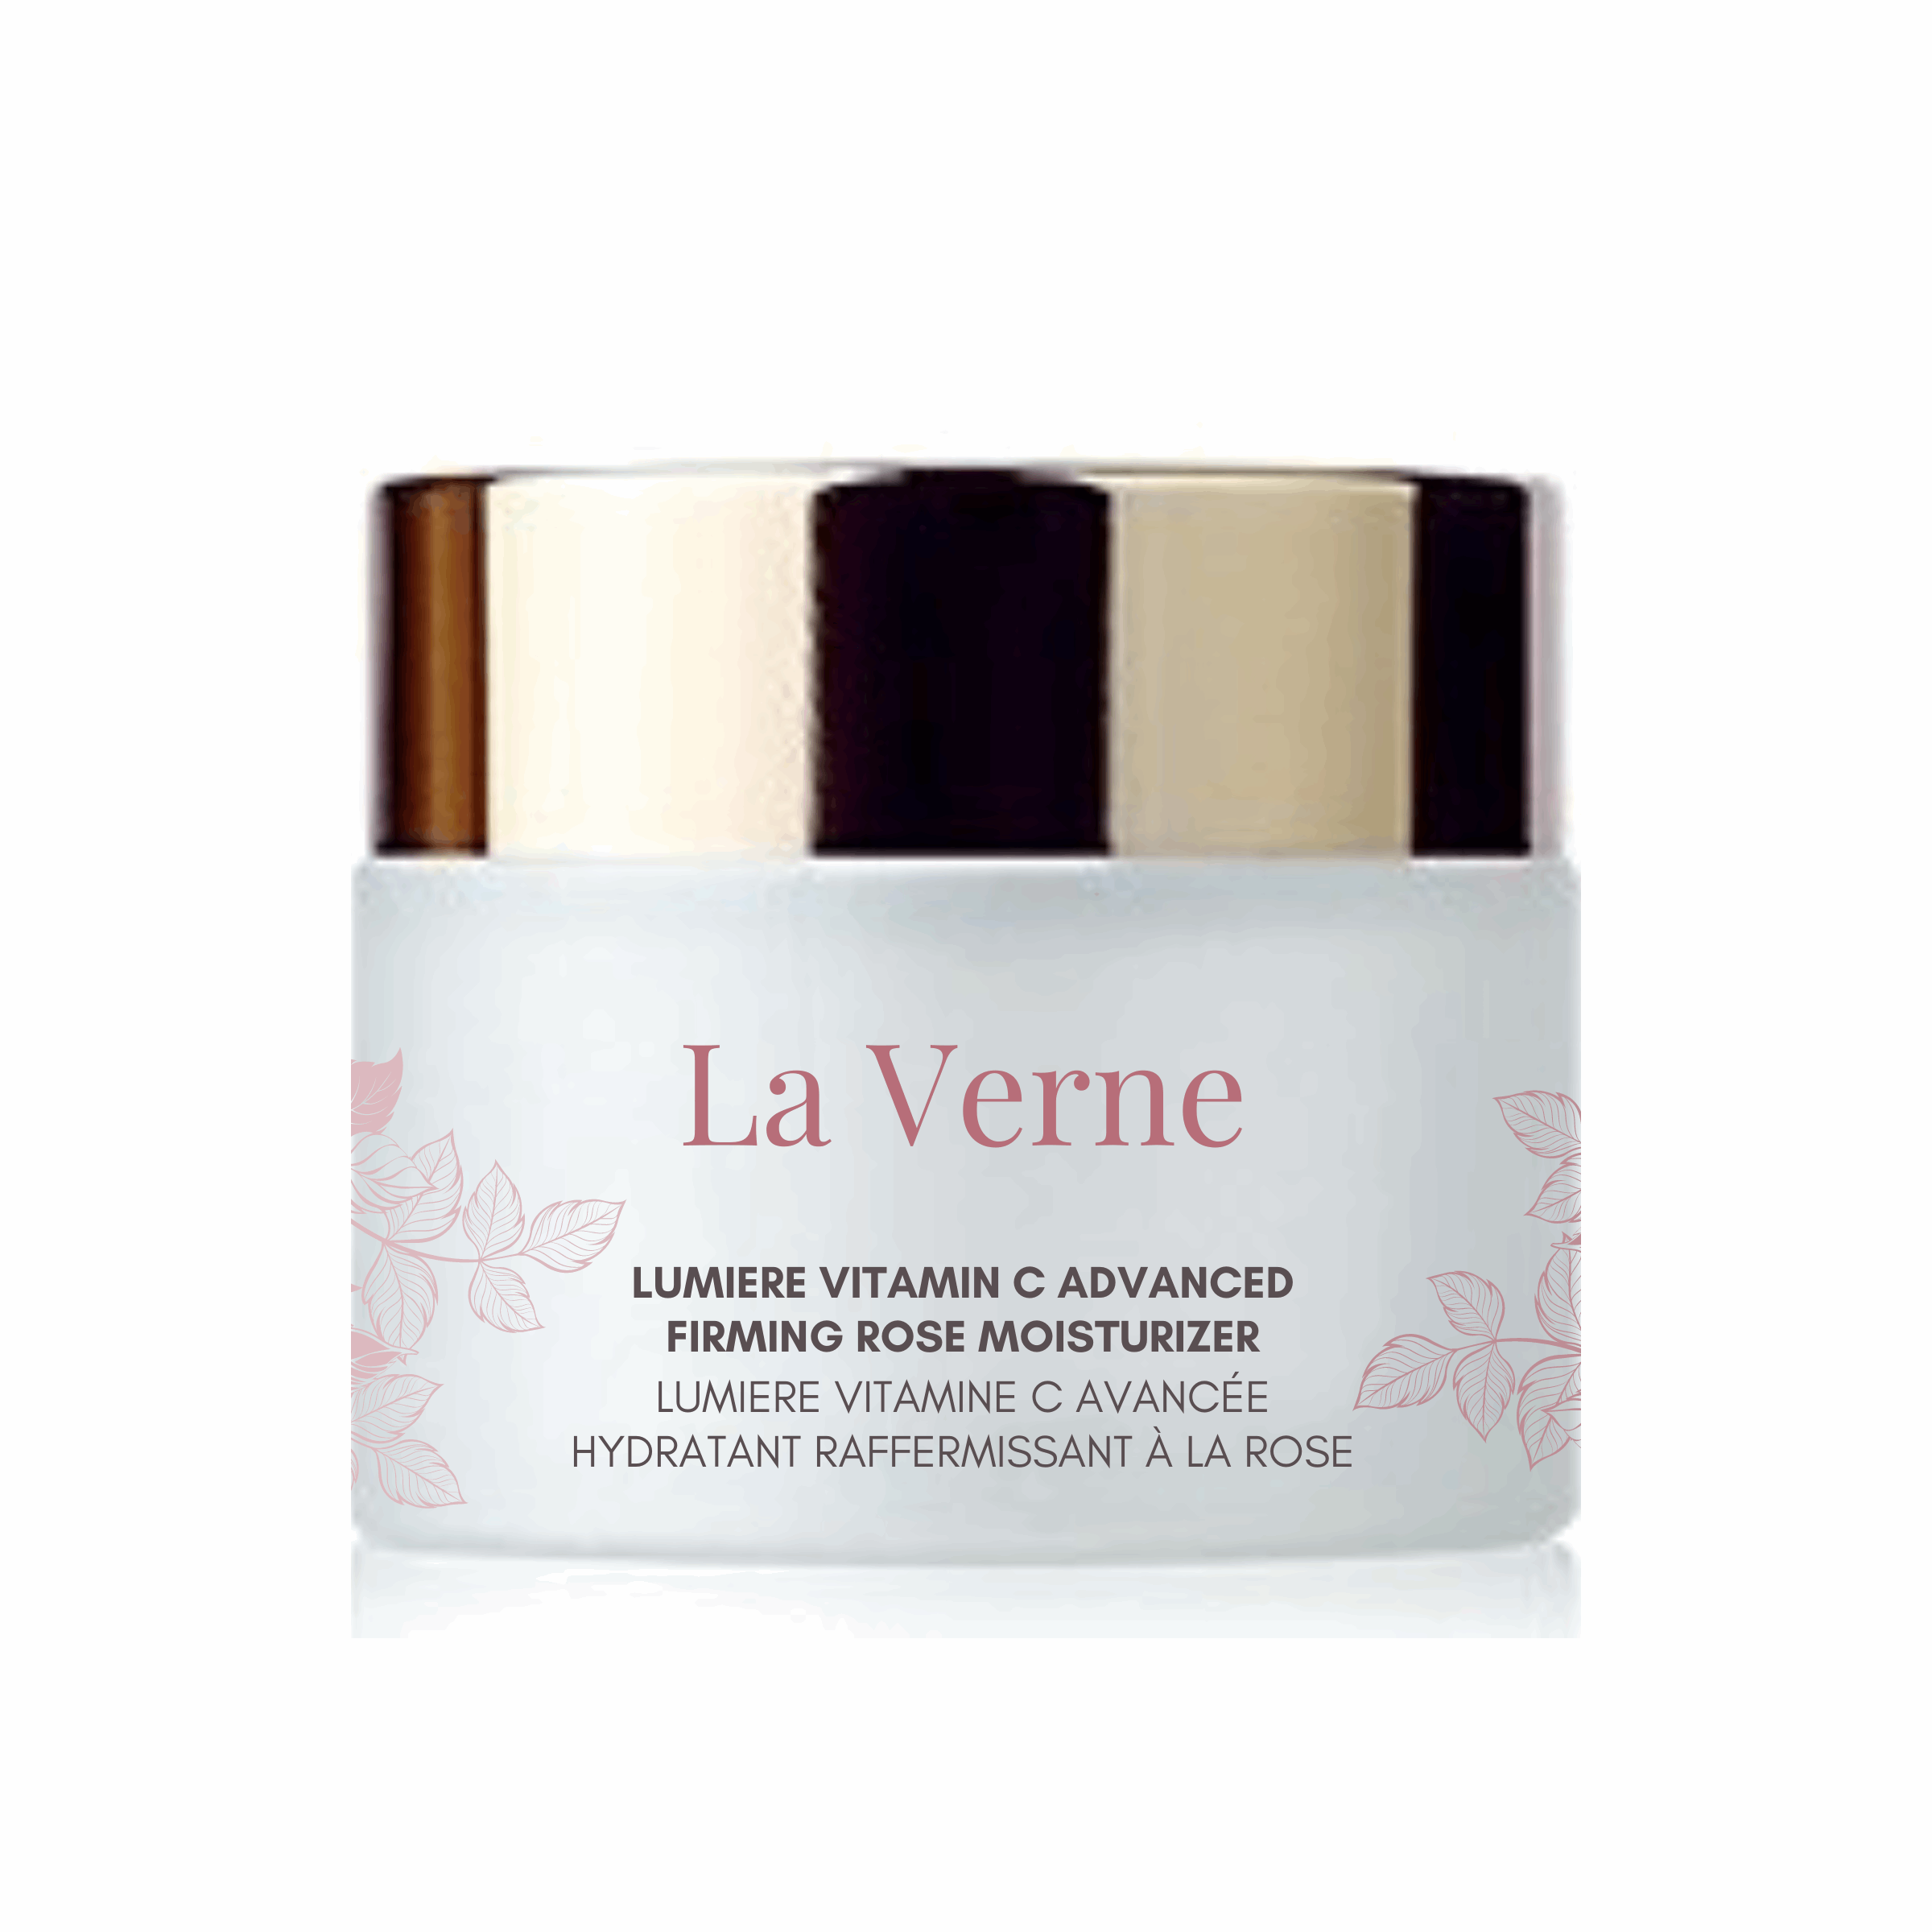 Lumiere Vitamin C Advanced Firming Rose Moisturizer – La Verne